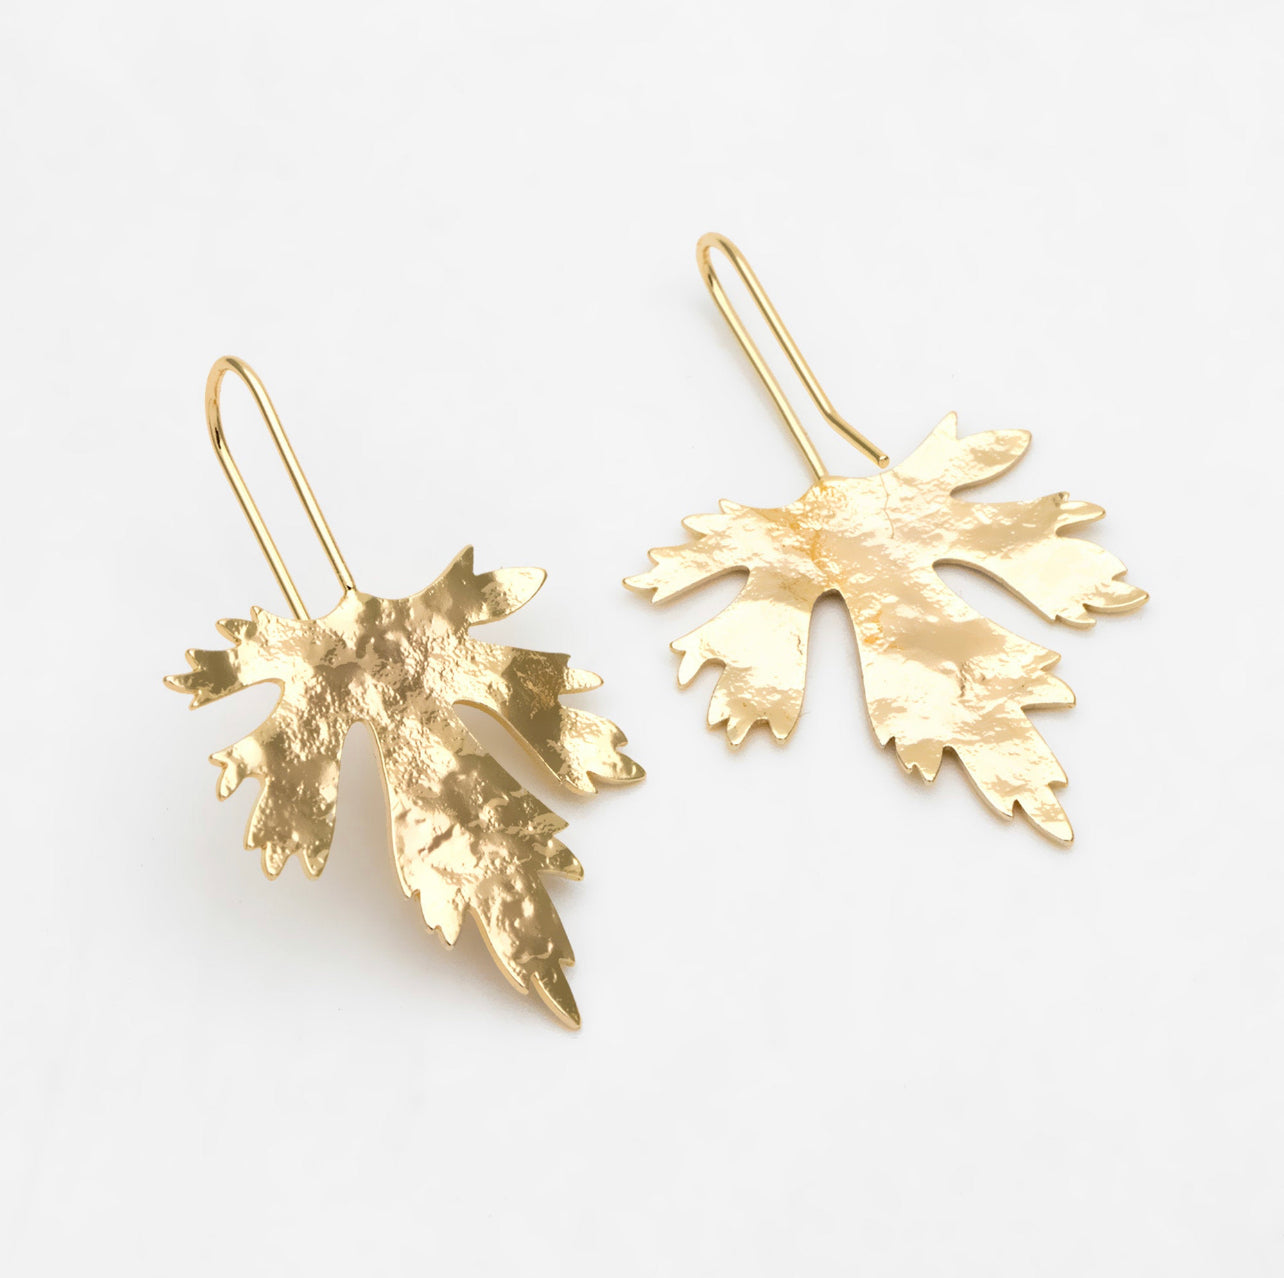 Oh Canada - Maple Leaf Earrings